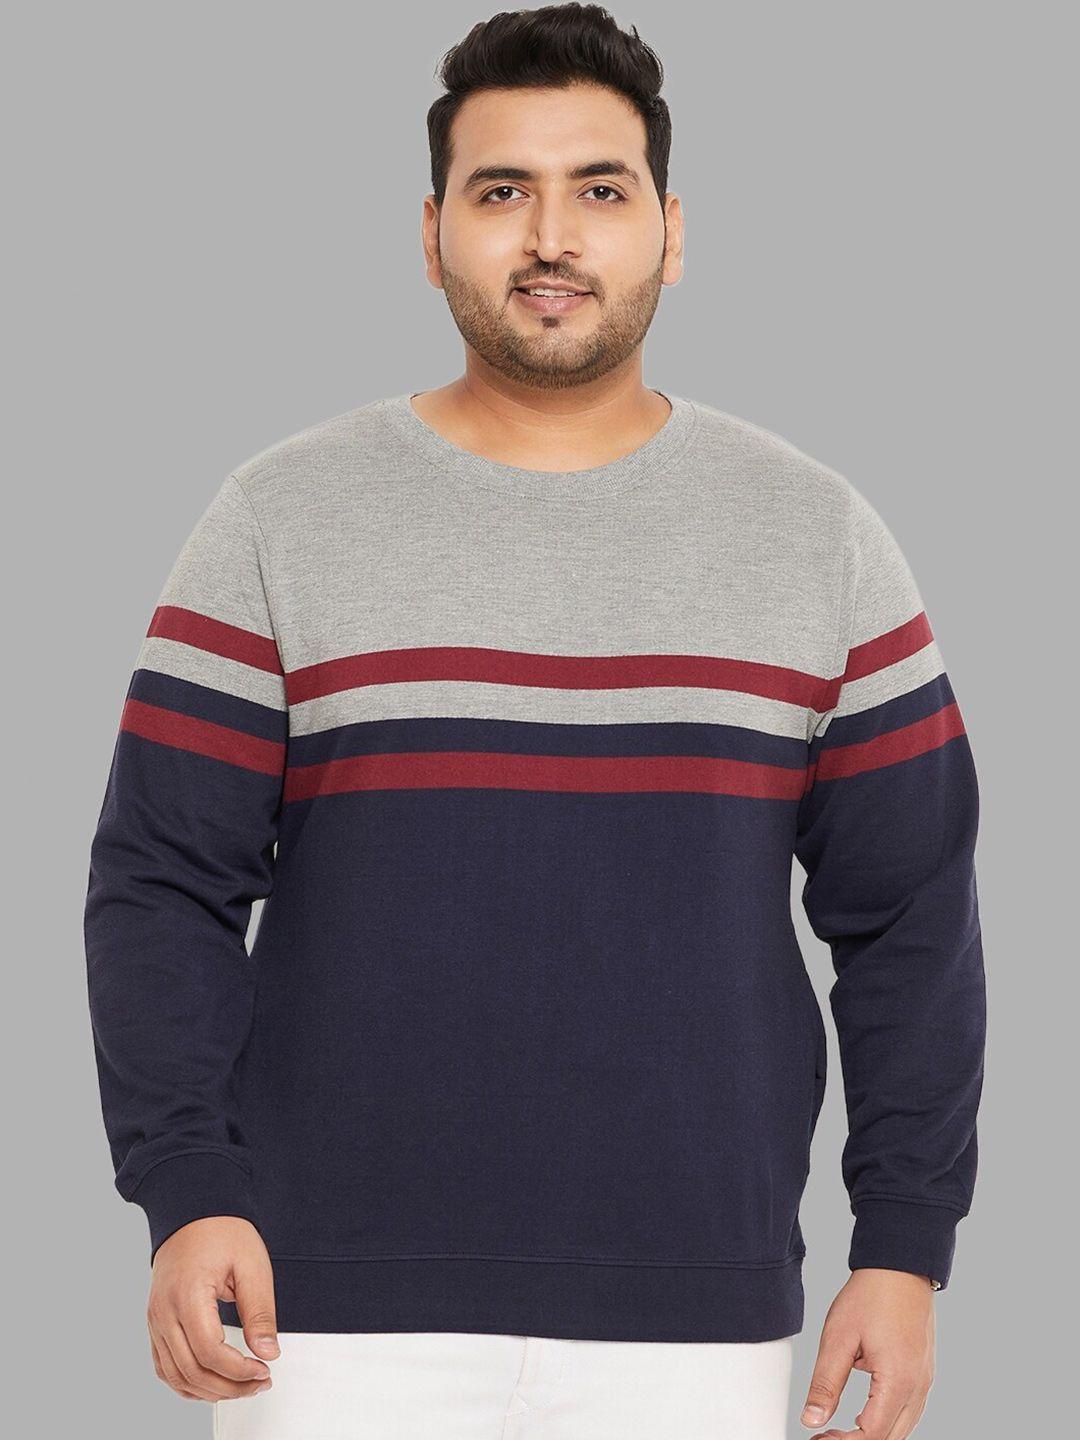 AUSTIVO Striped Fleece Sweatshirt